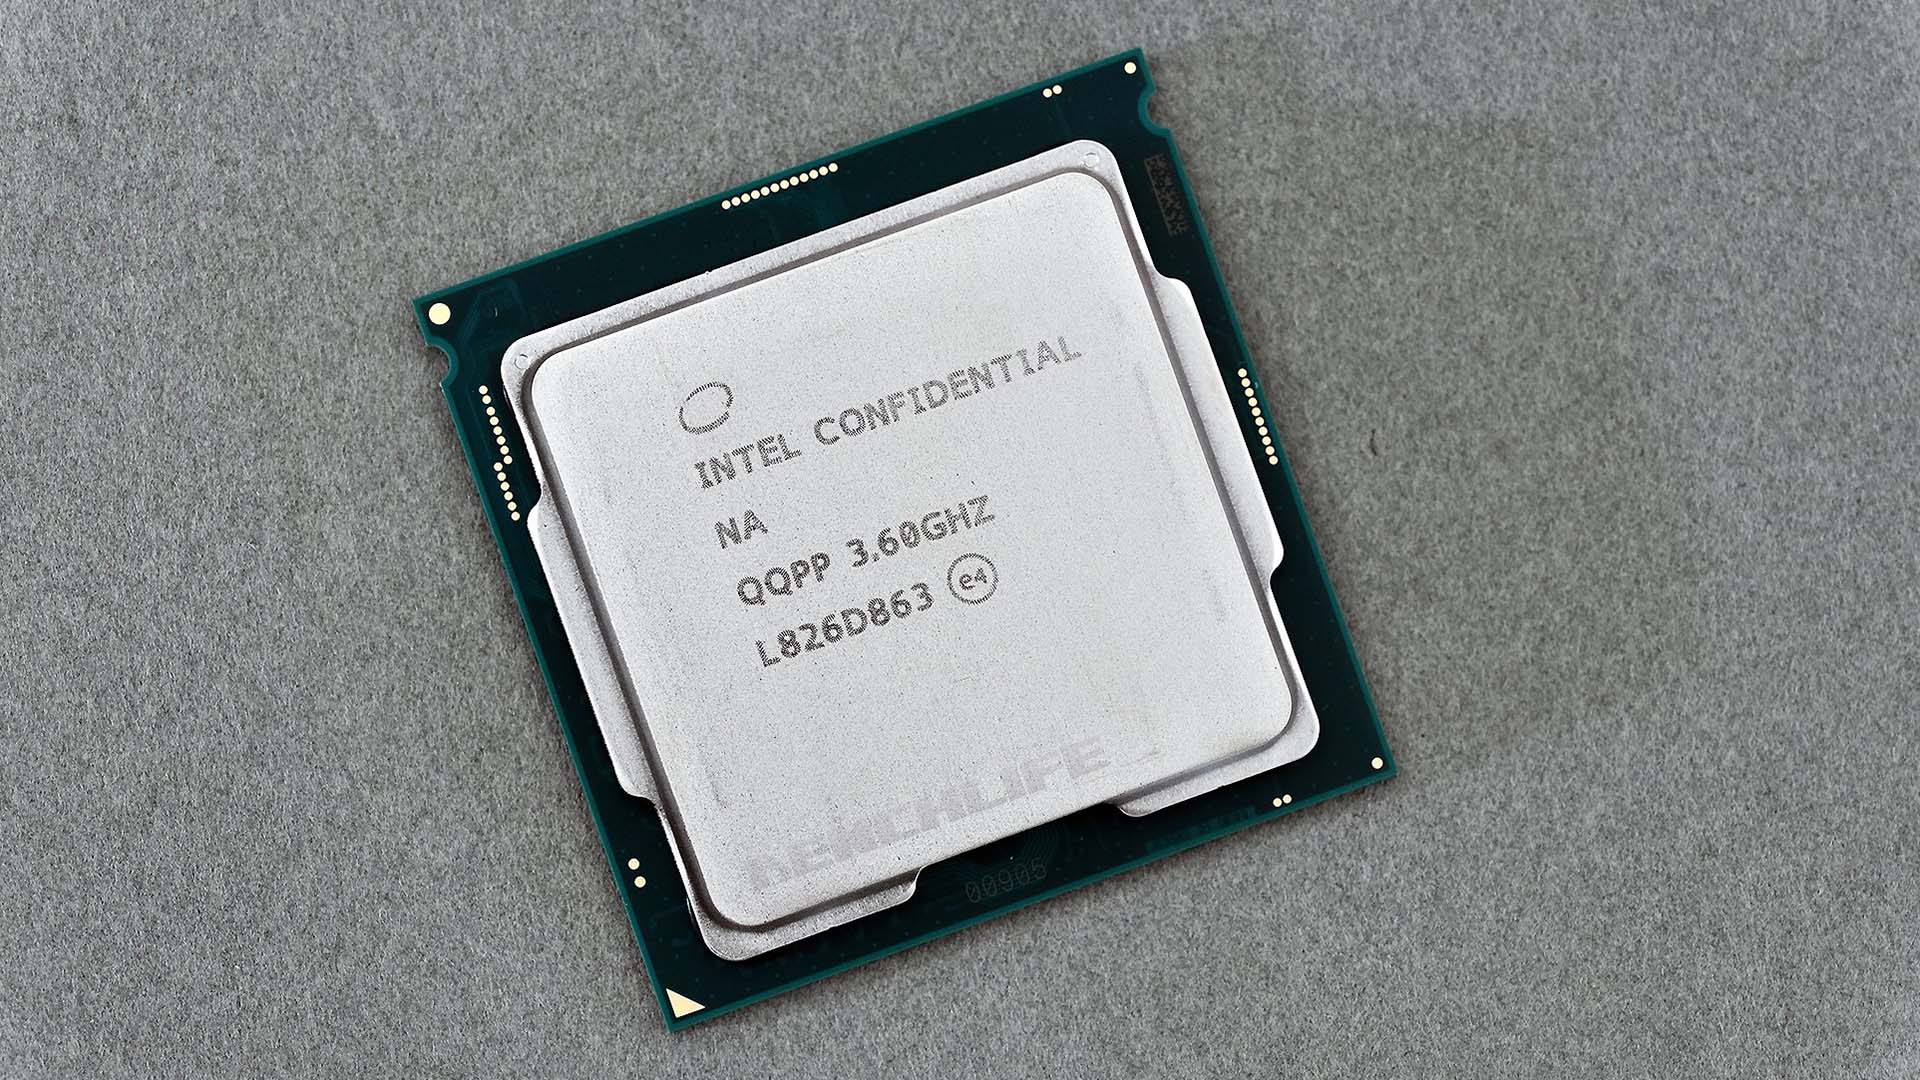 Core i7 14700. Intel Core i9-9900kf. Процессор i9 9900k. Core i5 9600kf. Intel Core i7-9700kf.